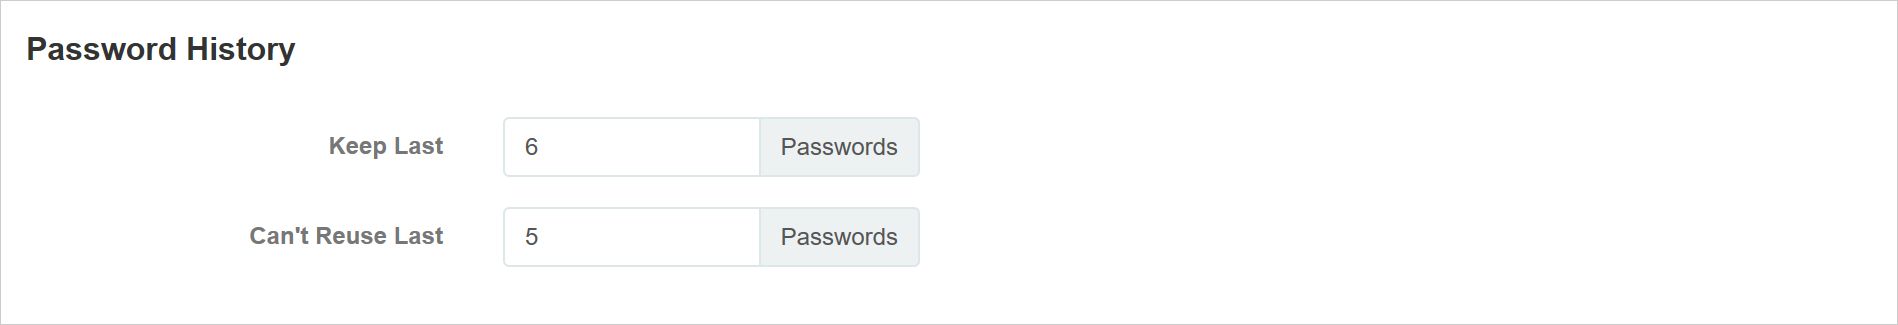 Password History Settings